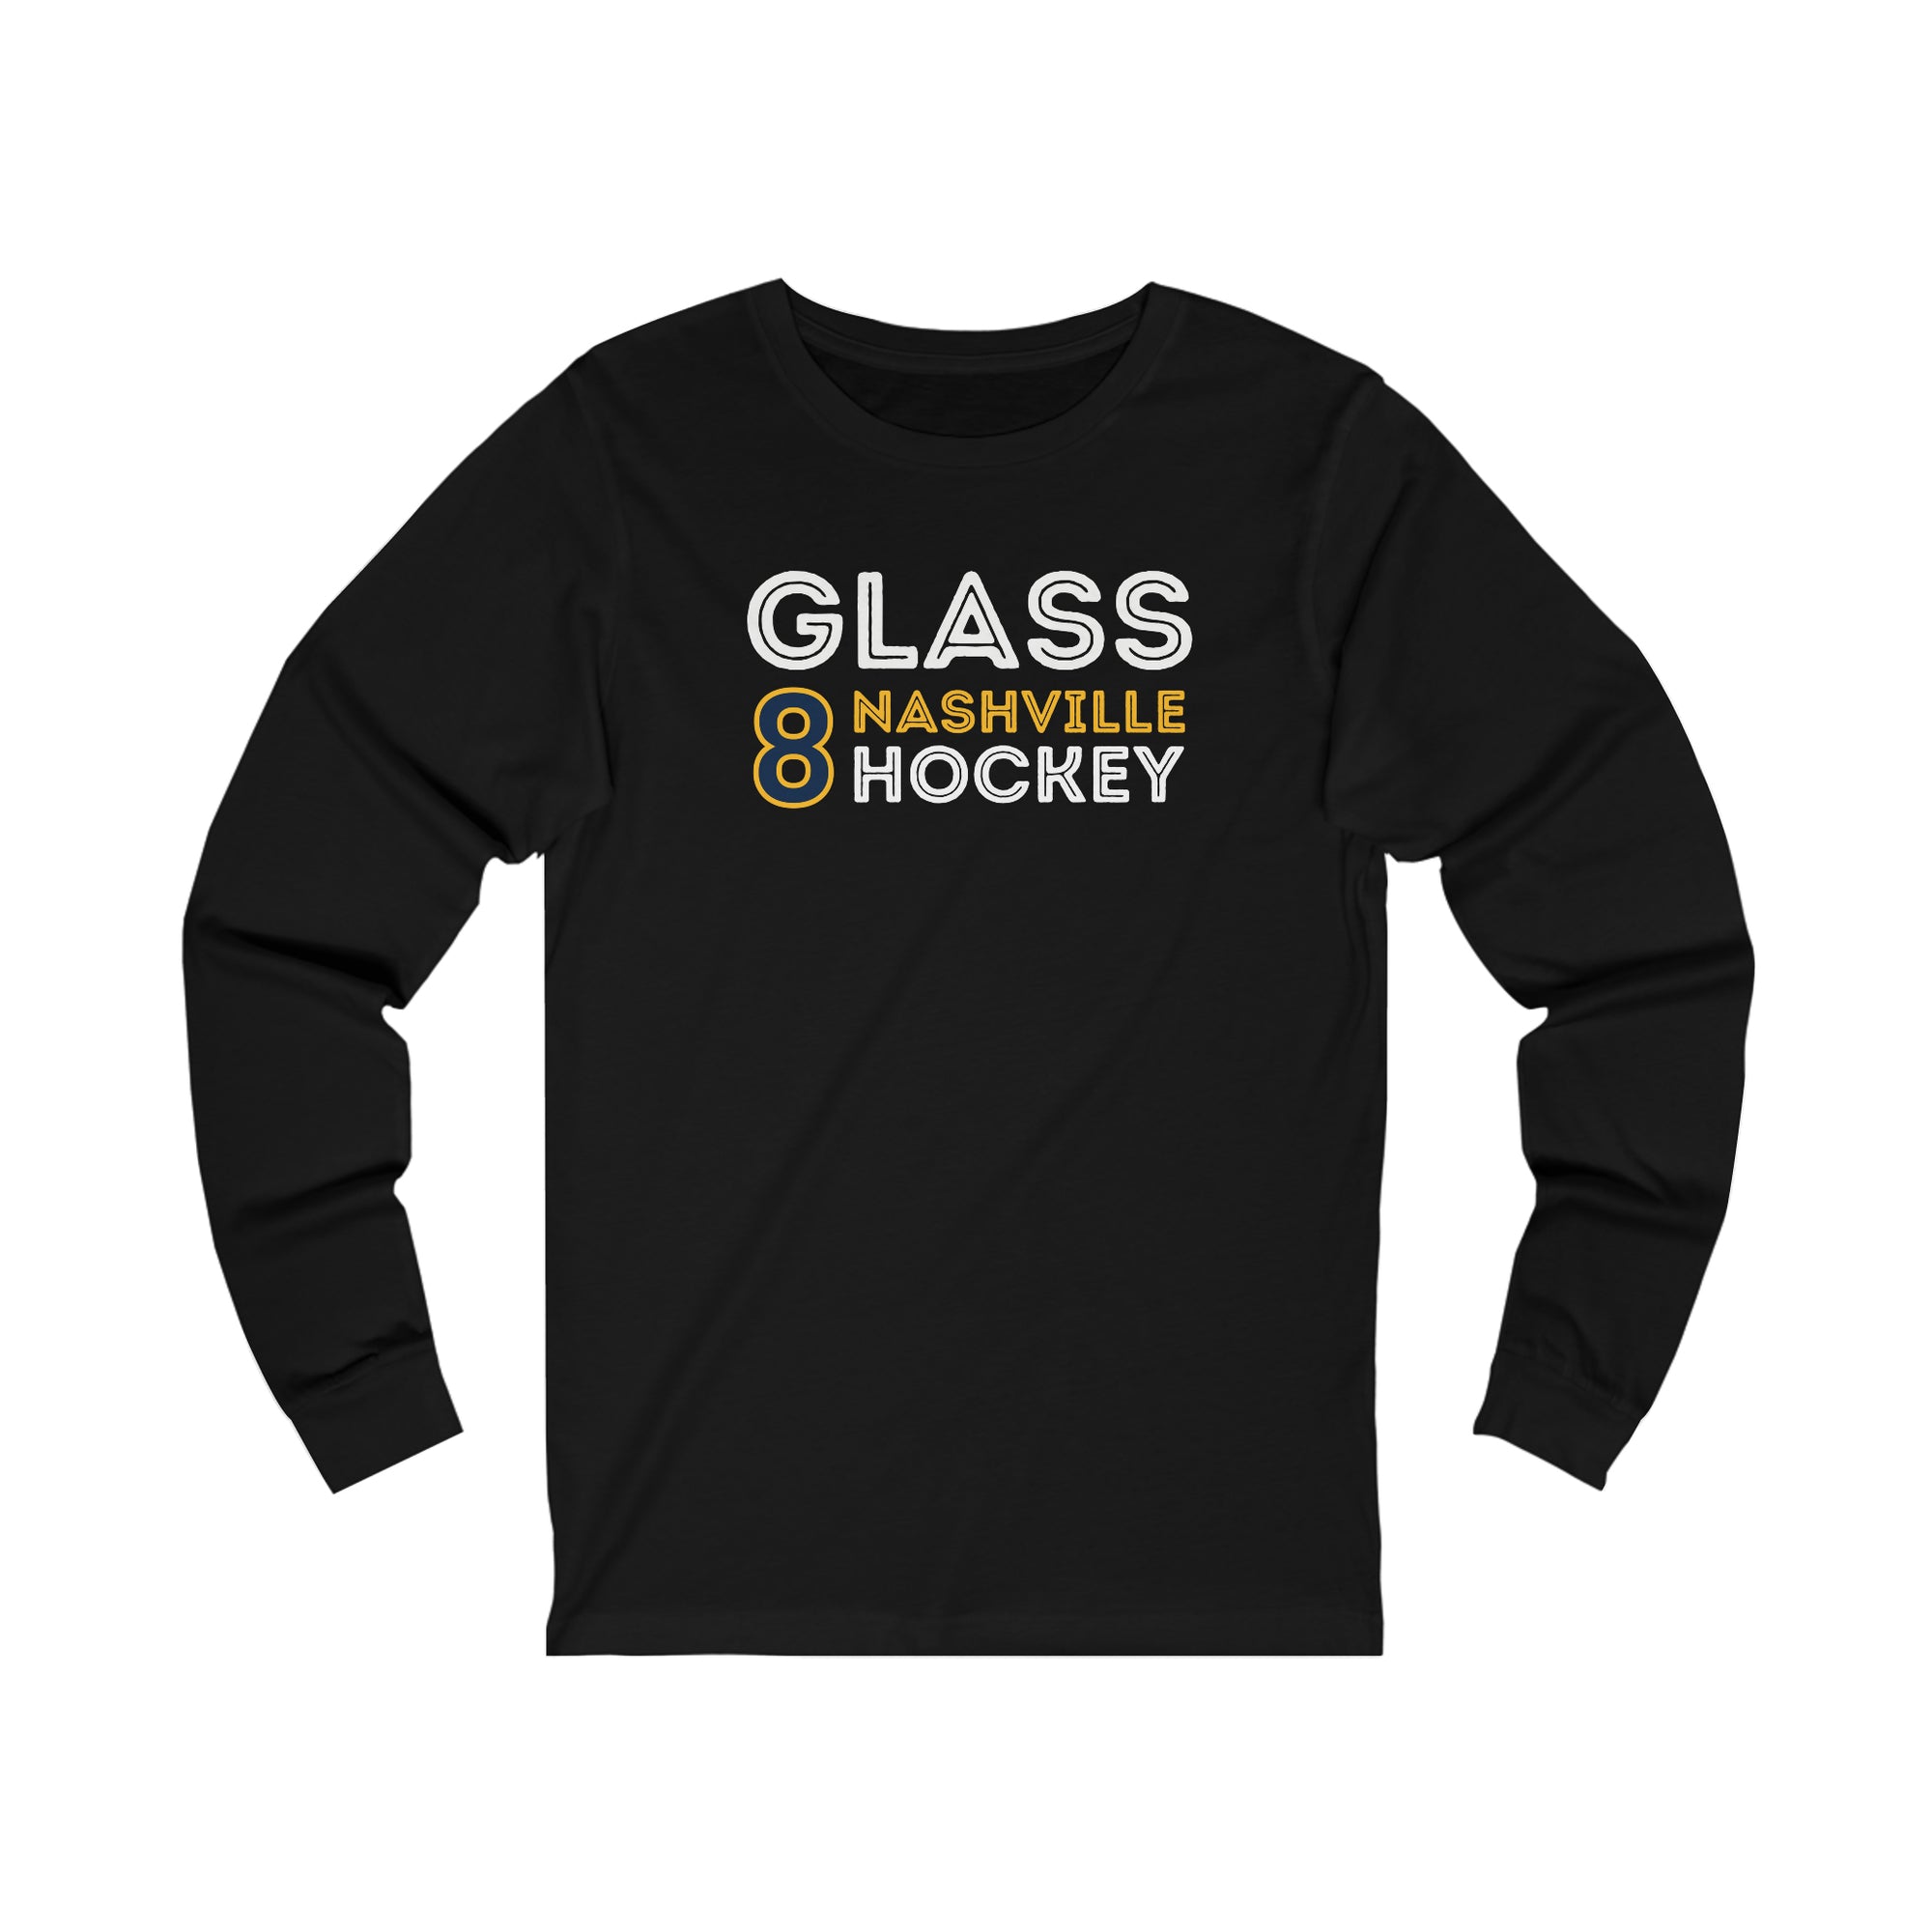 Glass 8 Nashville Hockey Grafitti Wall Design Unisex Jersey Long Sleeve Shirt